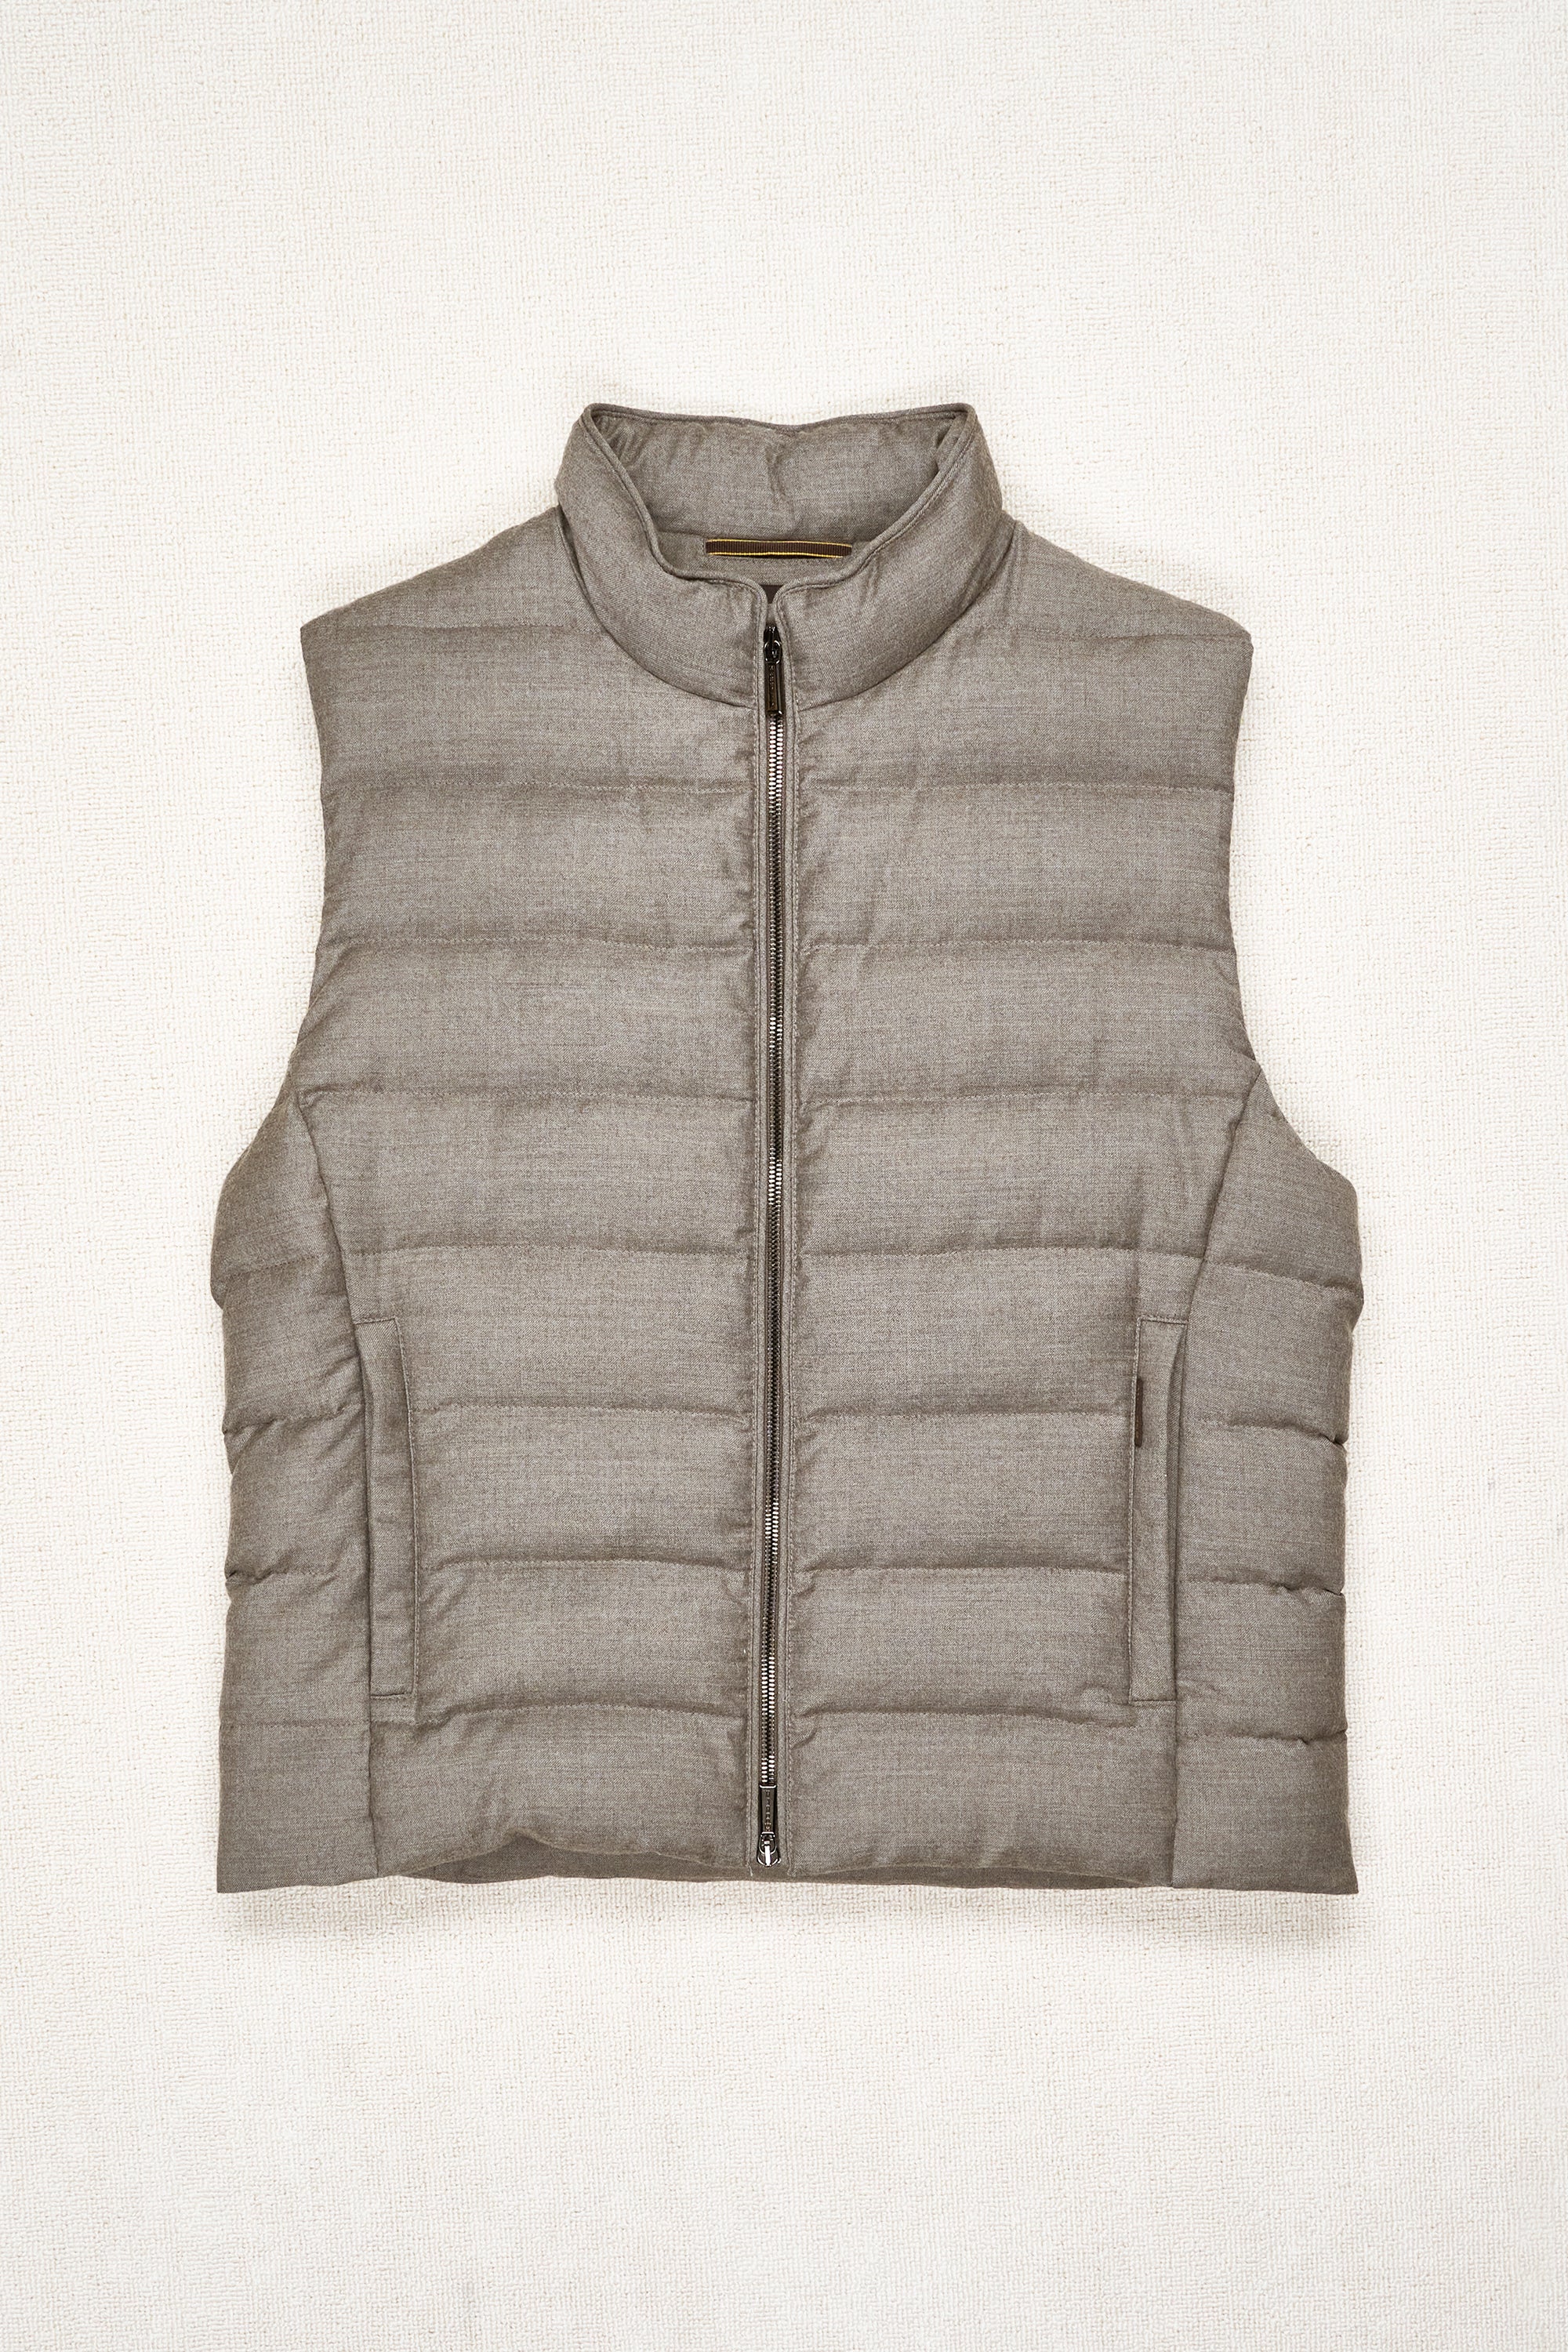 Moorer Mushroom Wool/Cashmere Down Vest